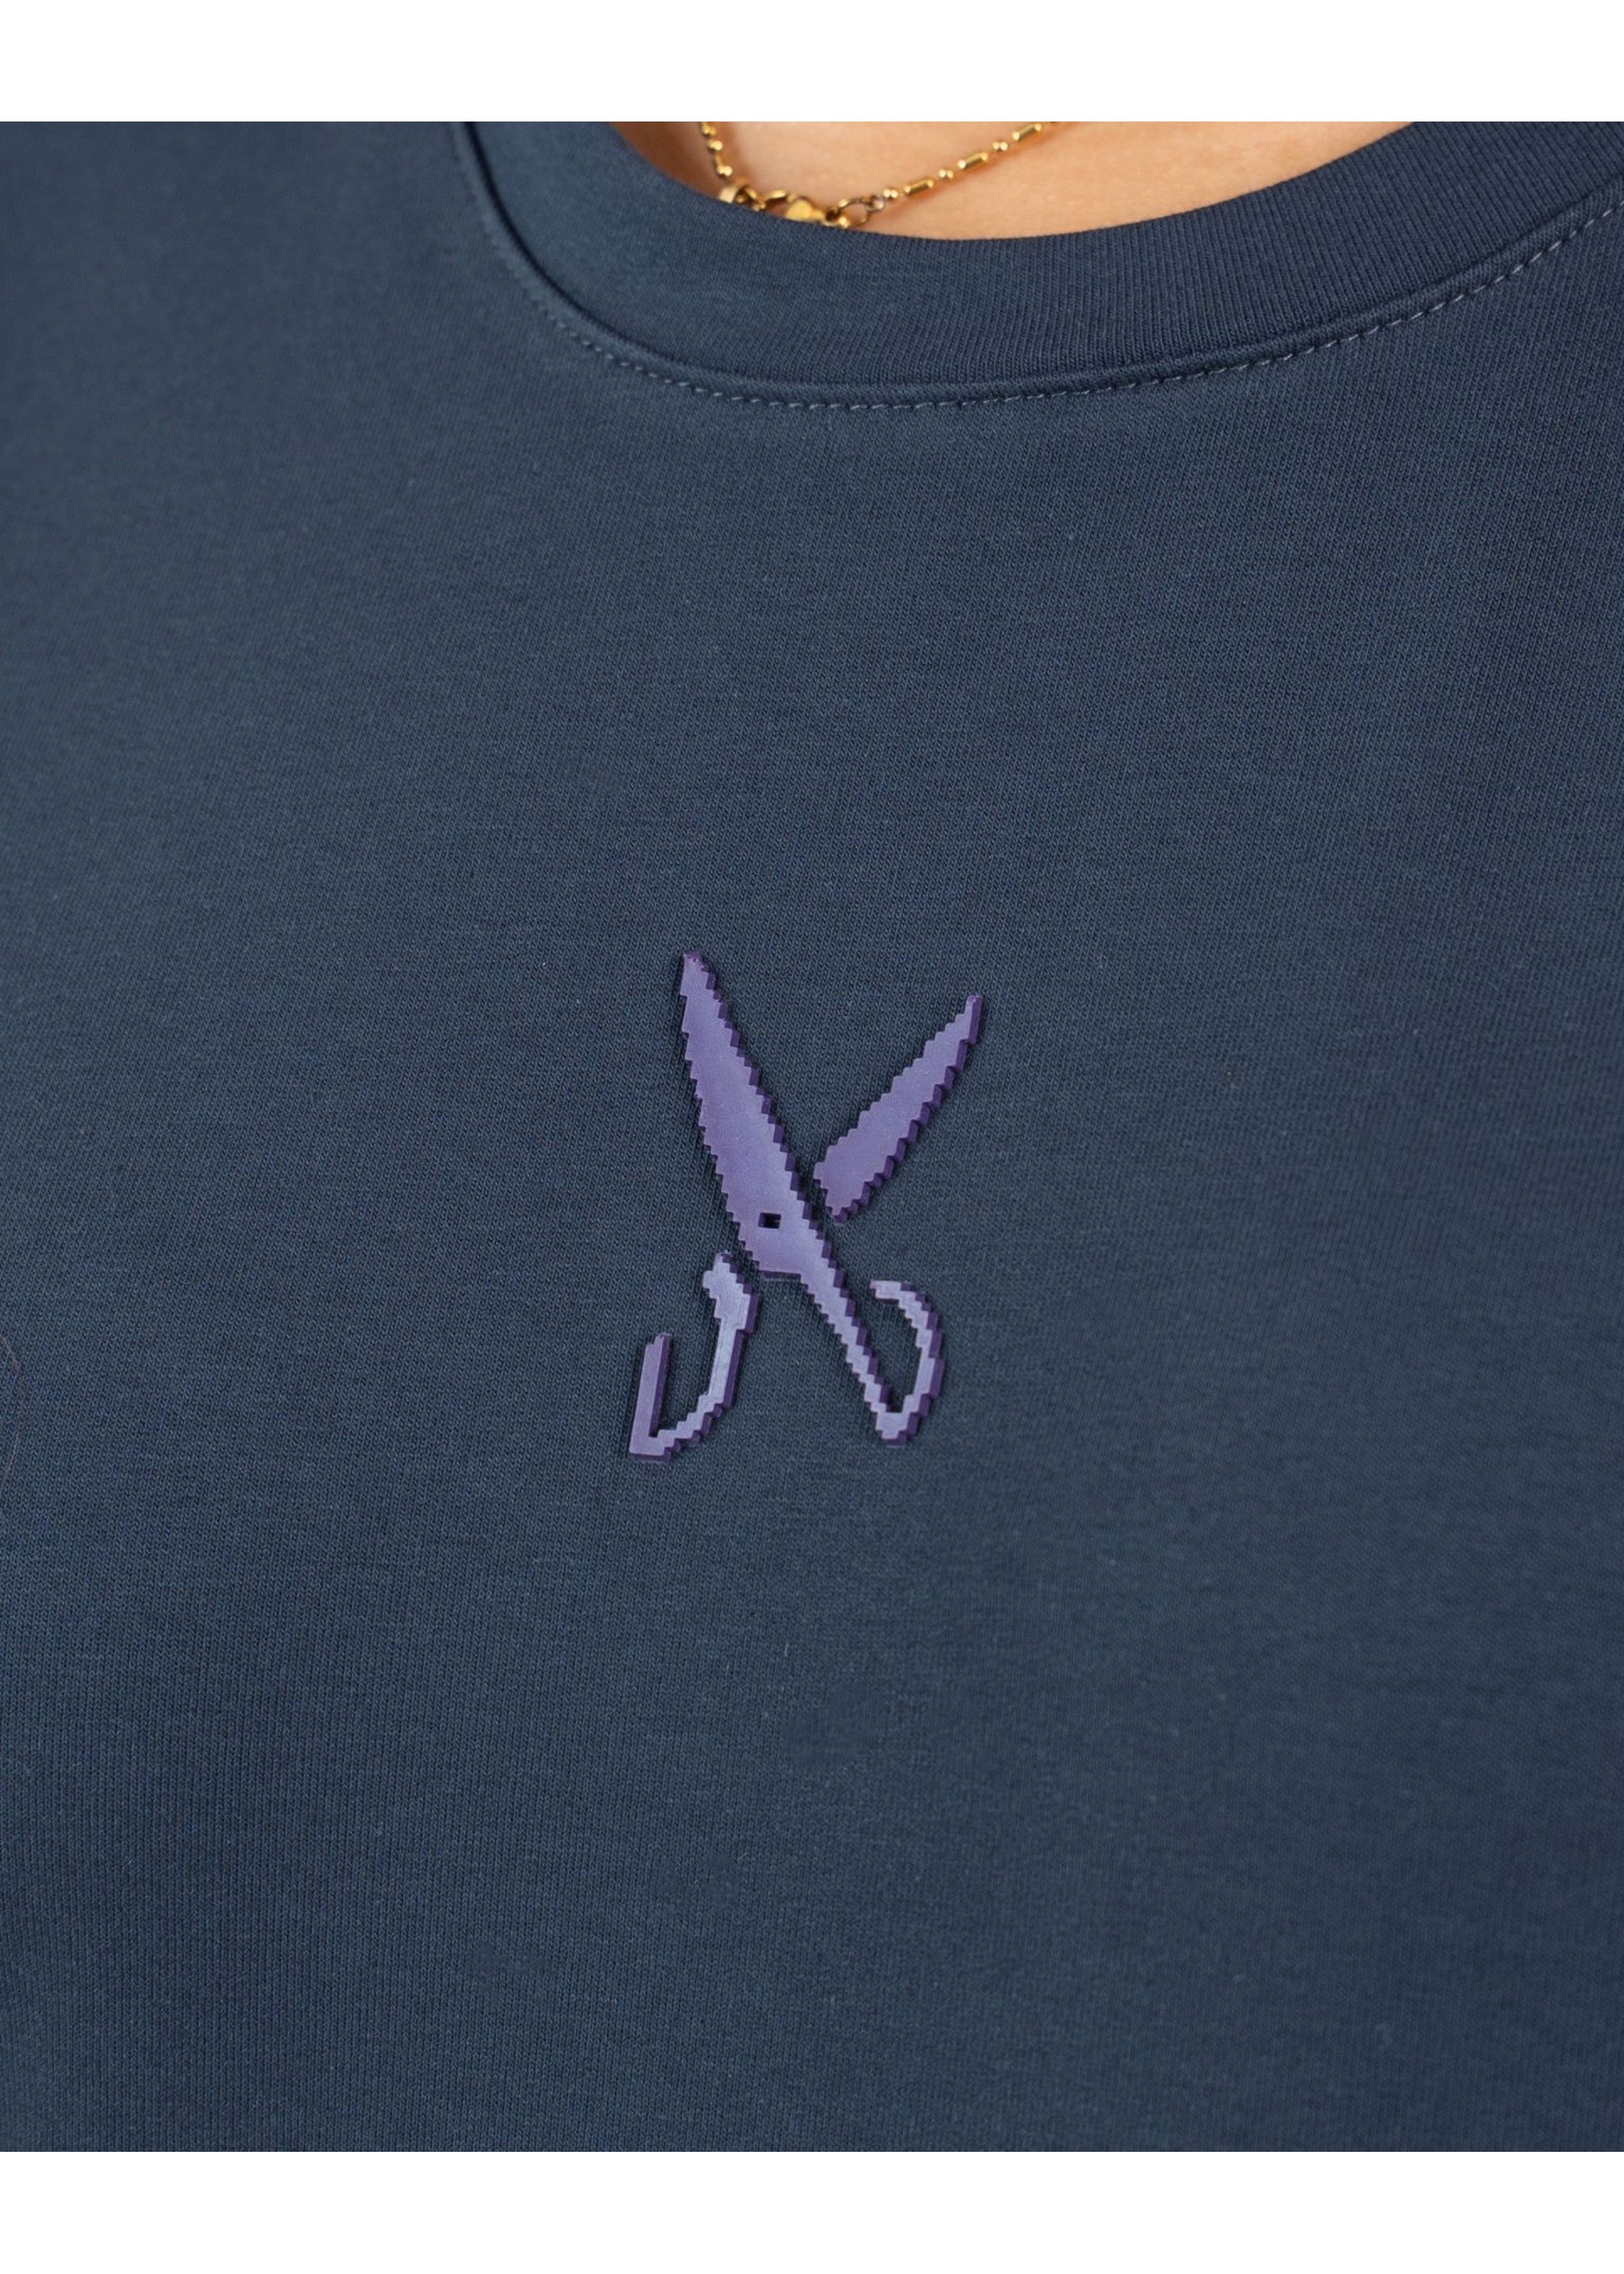 Plain T-shirt with zigzag logo - Gray